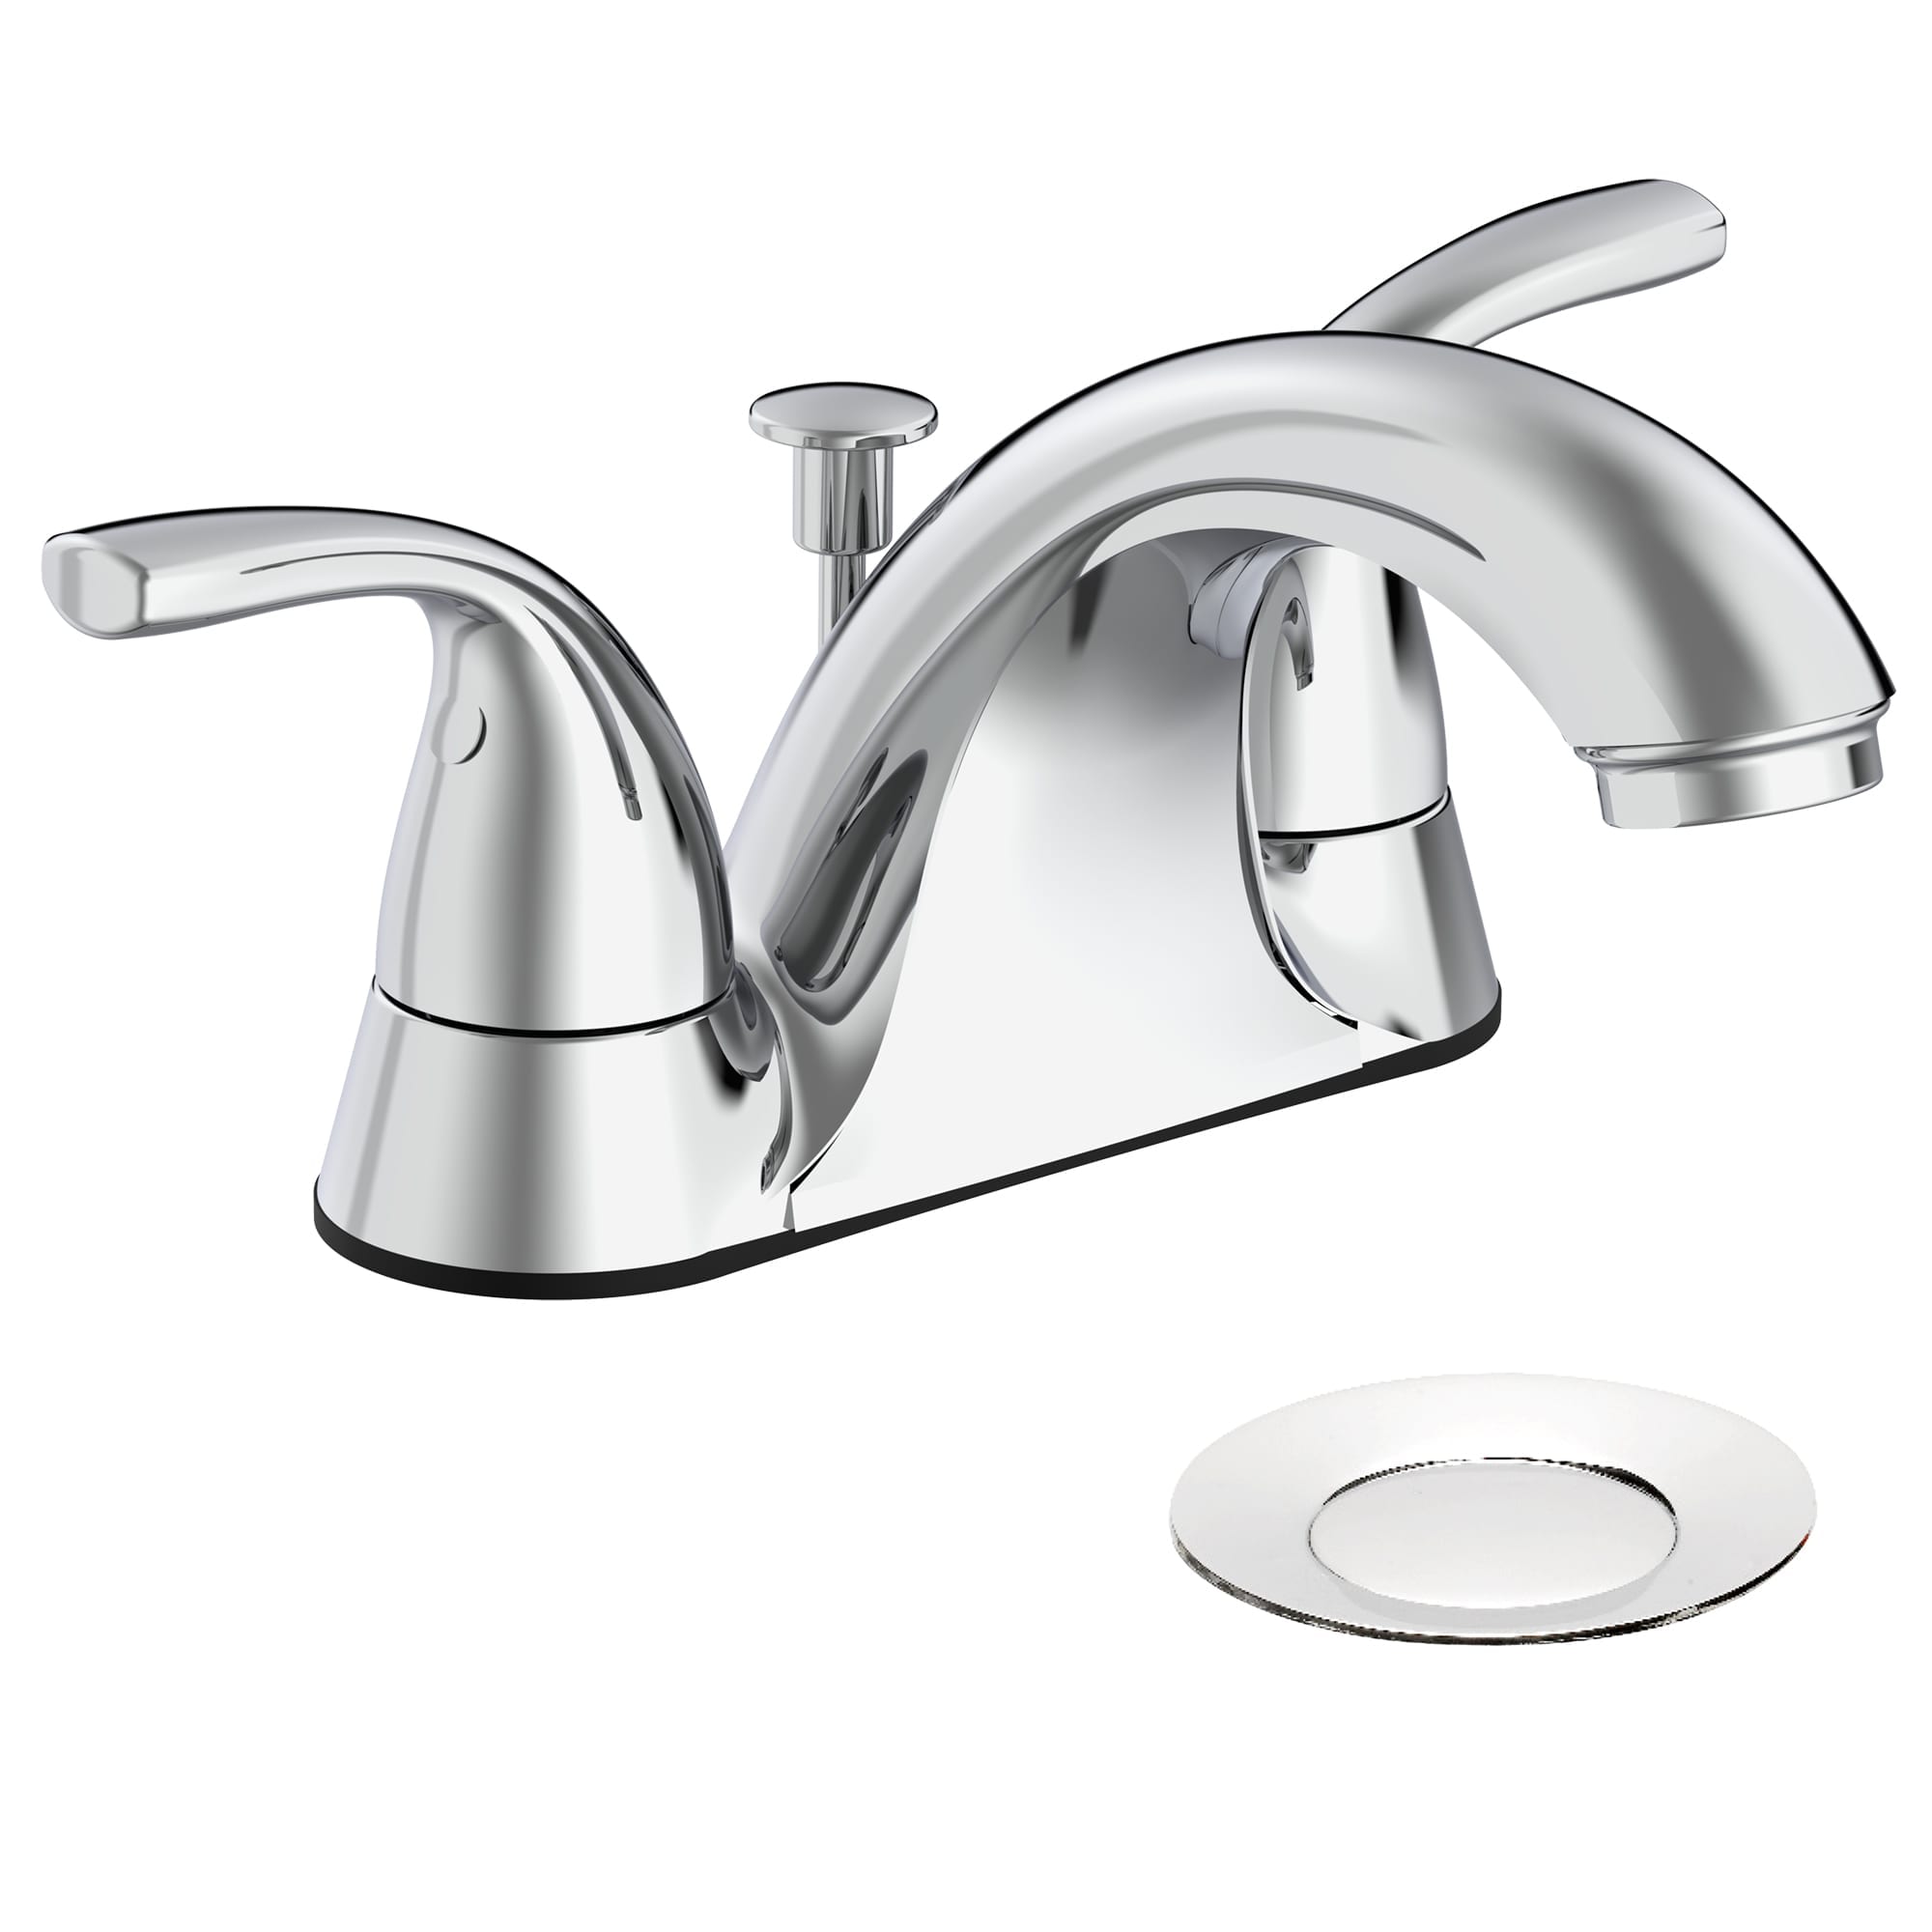 RV Marine Mobile Home Parts Kitchen Sink & Bathroom Lav Faucet Combo Chrome 